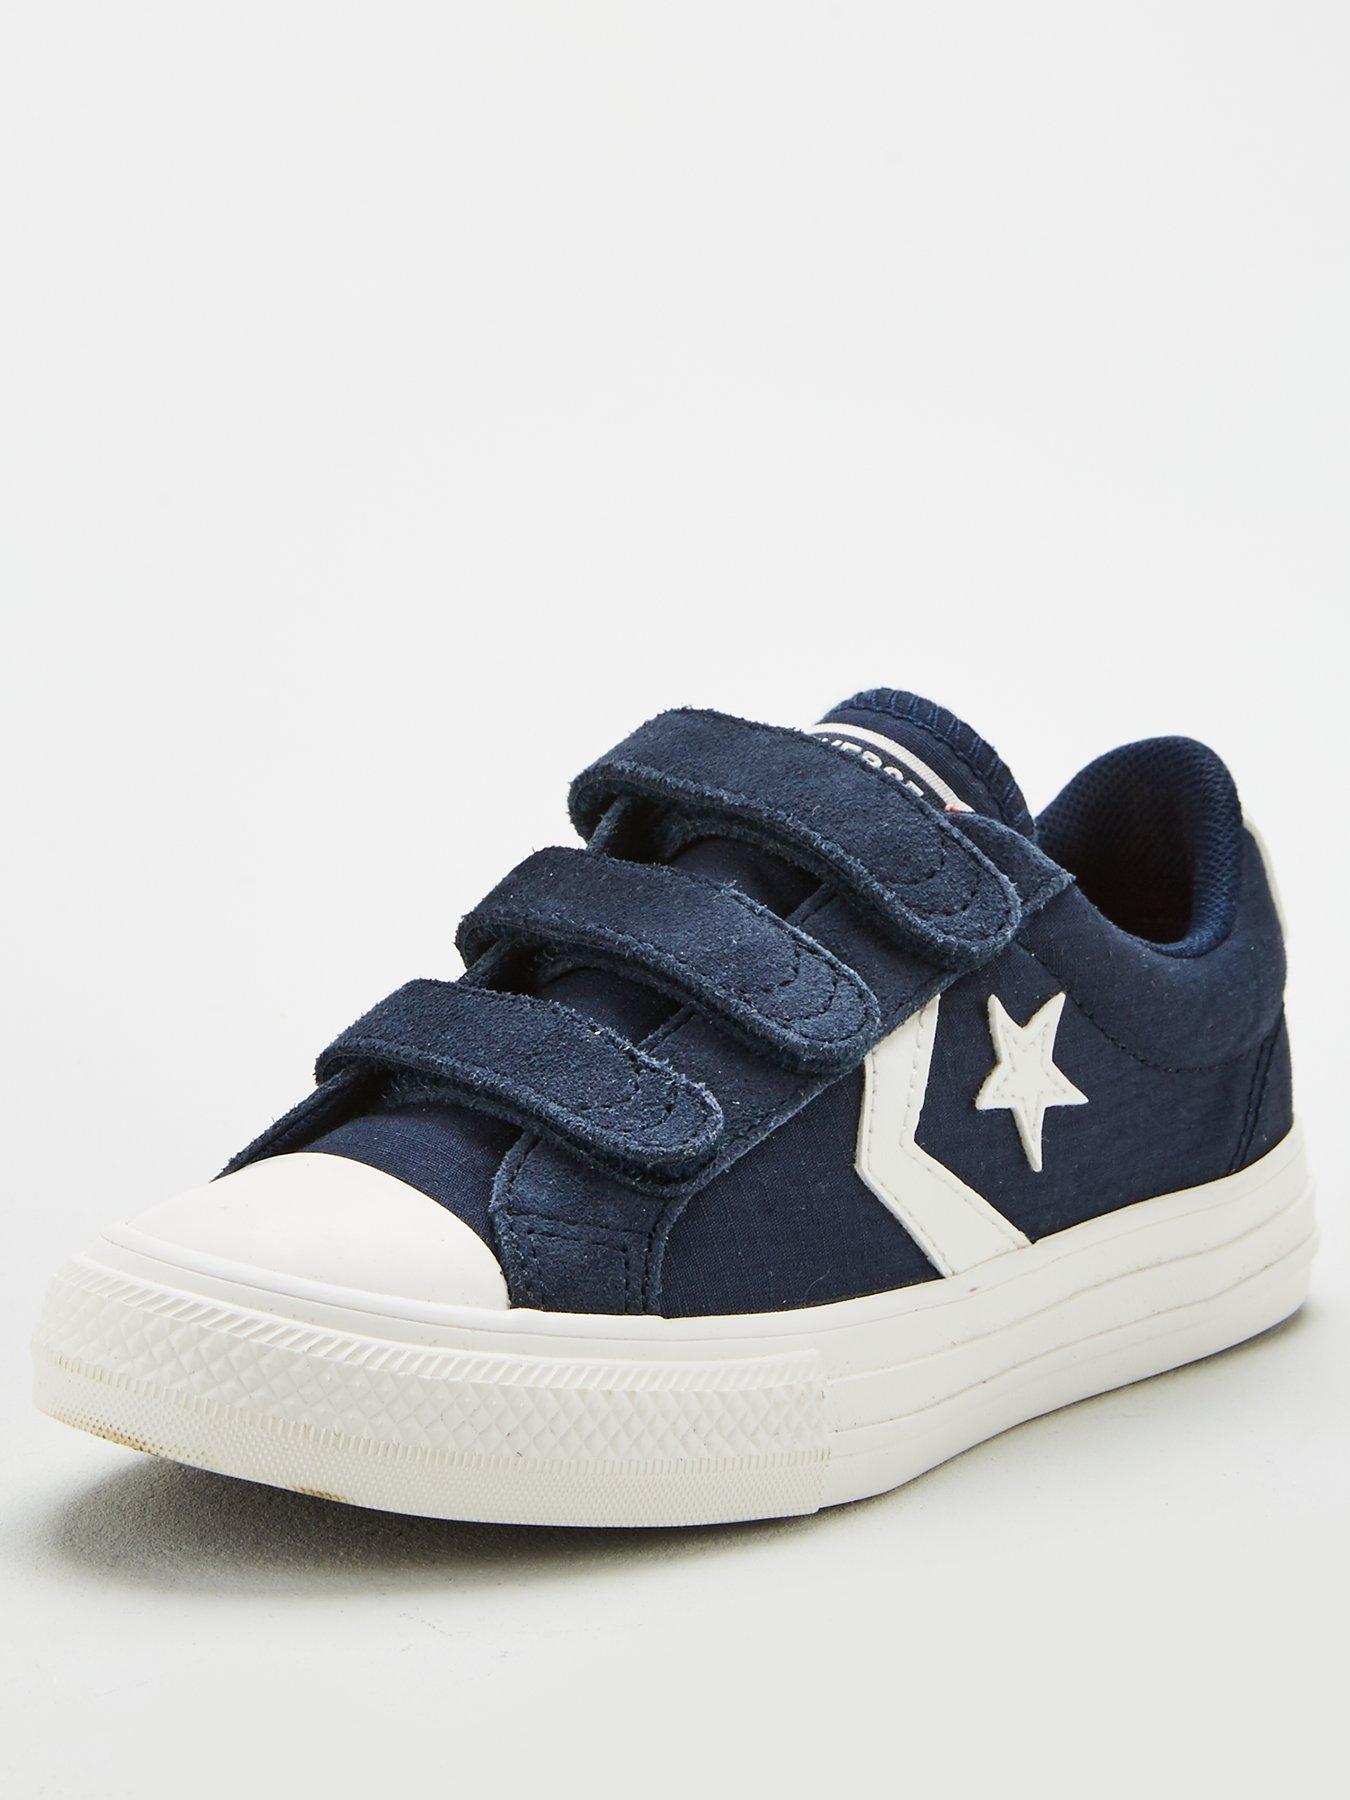 converse boots navy blue